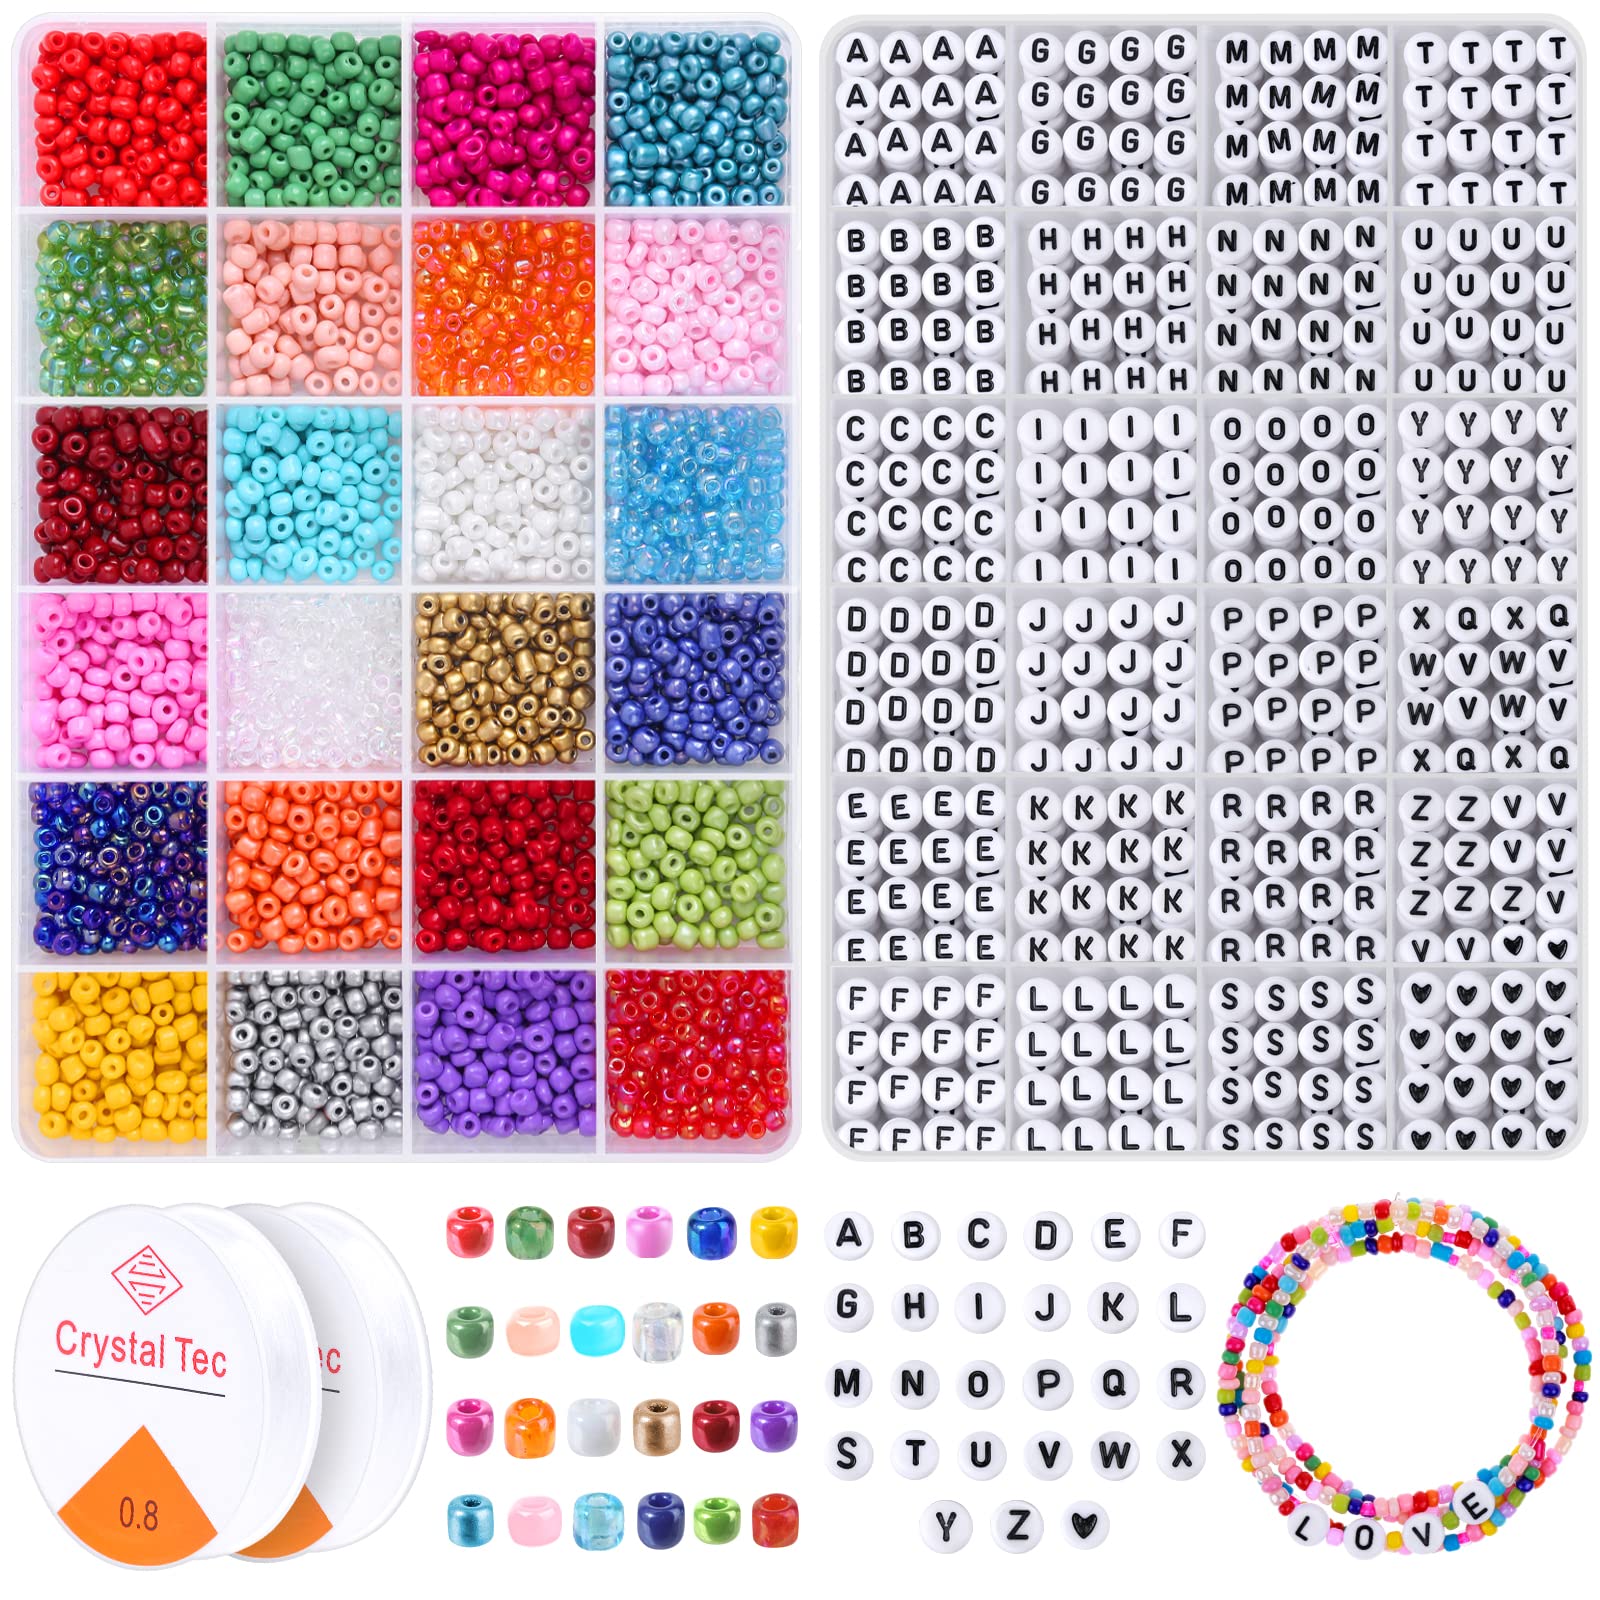 1200-40000 PCs Glass Seed Beads Kit Mixed Color Bead Alphabet